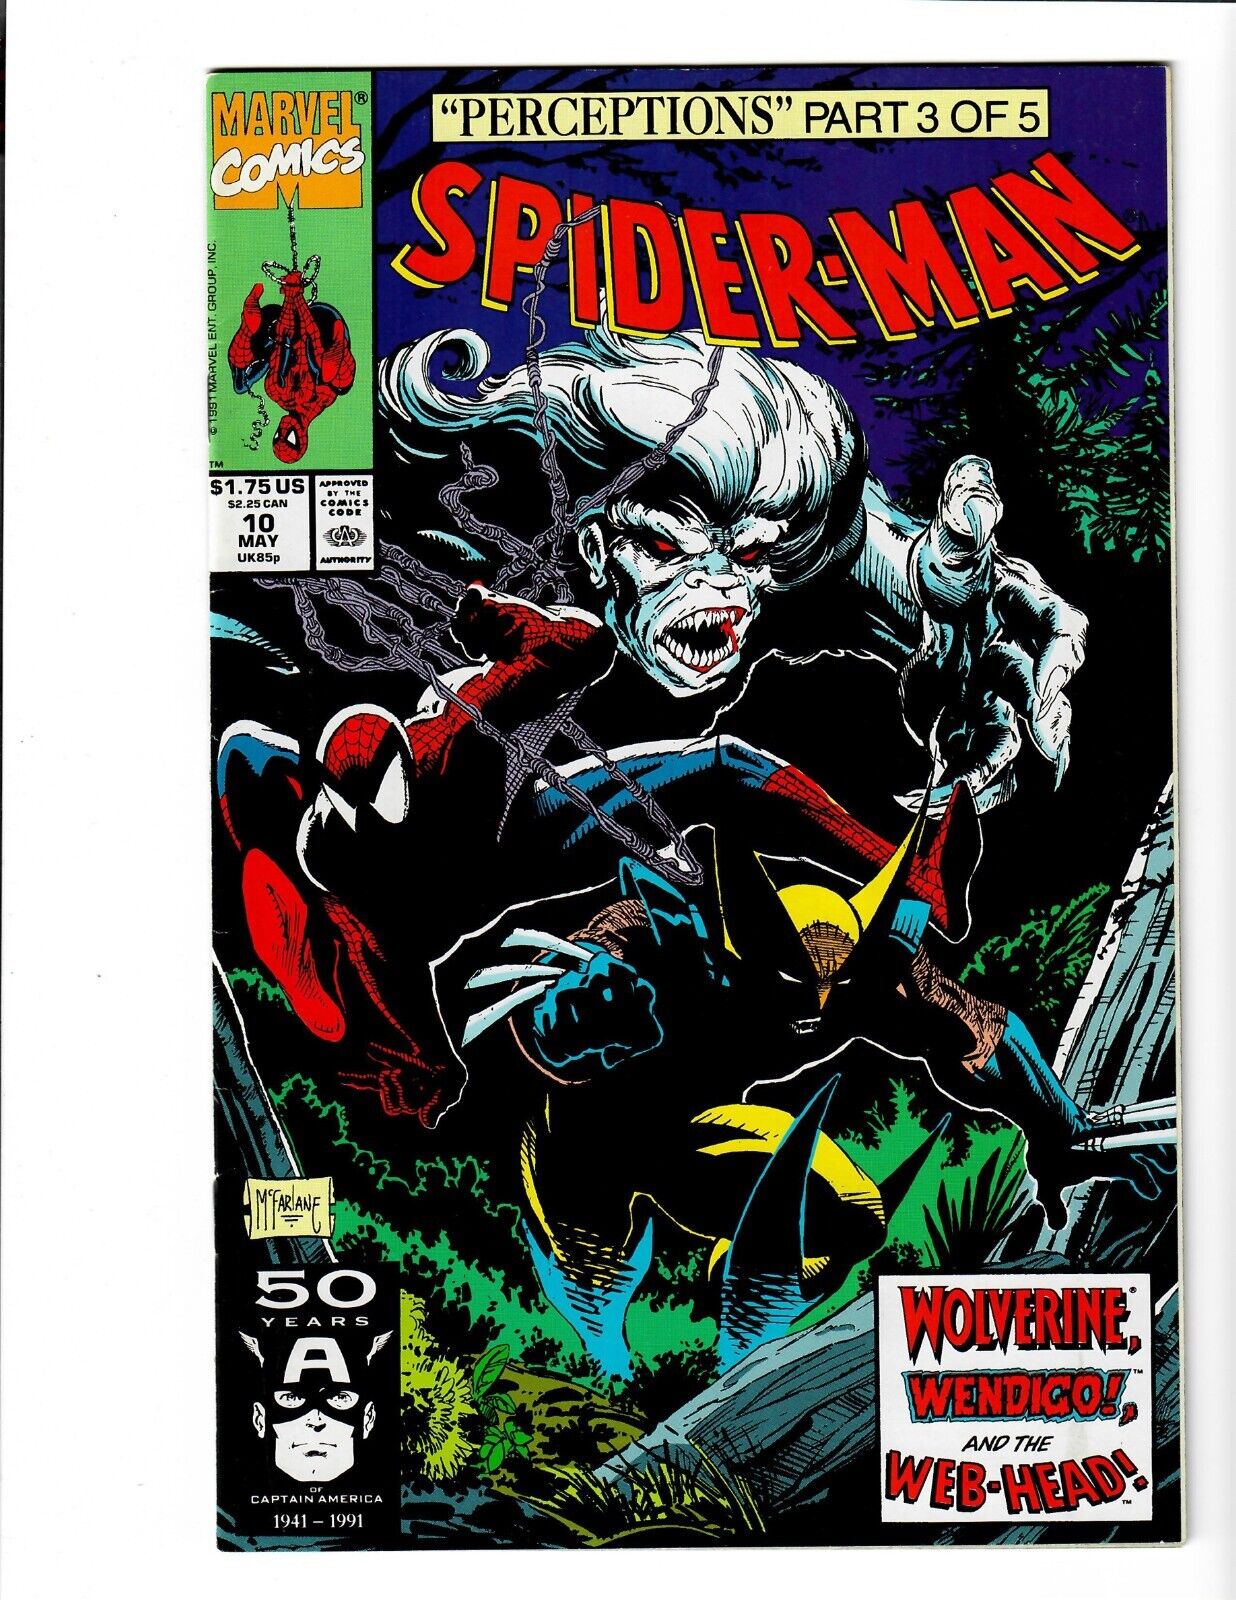 1991 Marvel Comics Spider-Man Perceptions Part 3 of 5 Issue #10